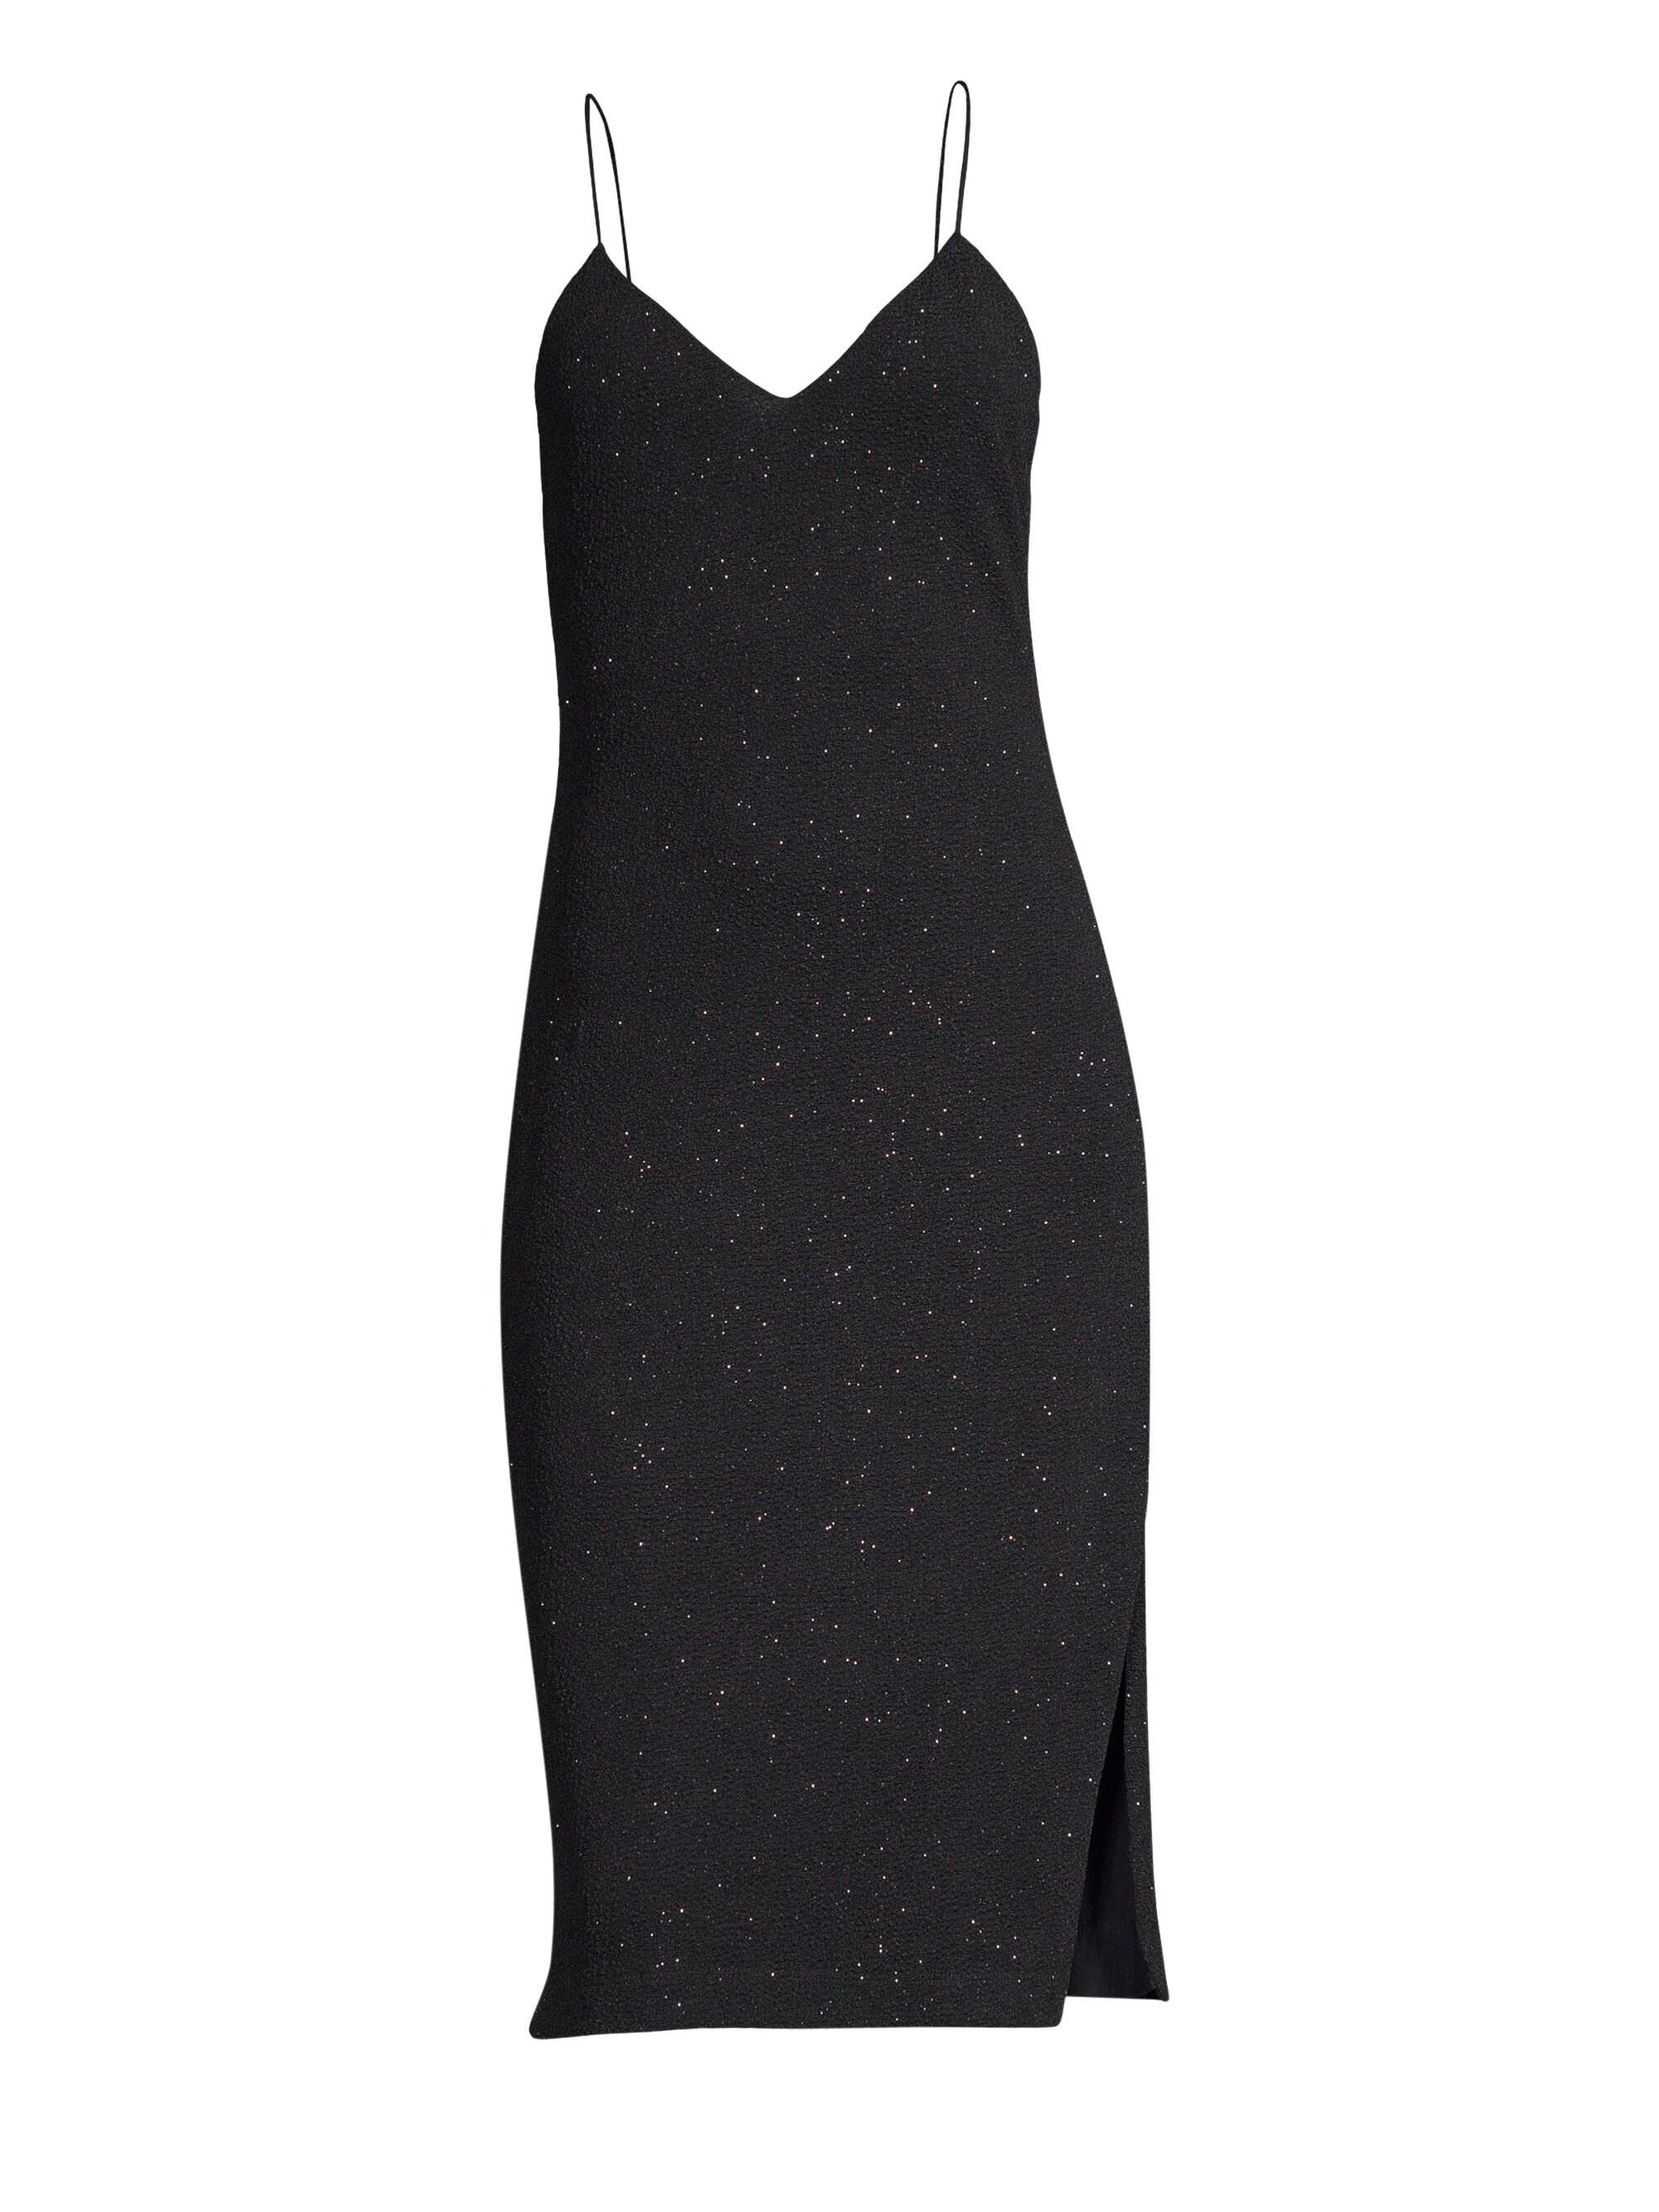 Alice + Olivia Stila Fitted Side Slit Midi Dress in Black - Lyst